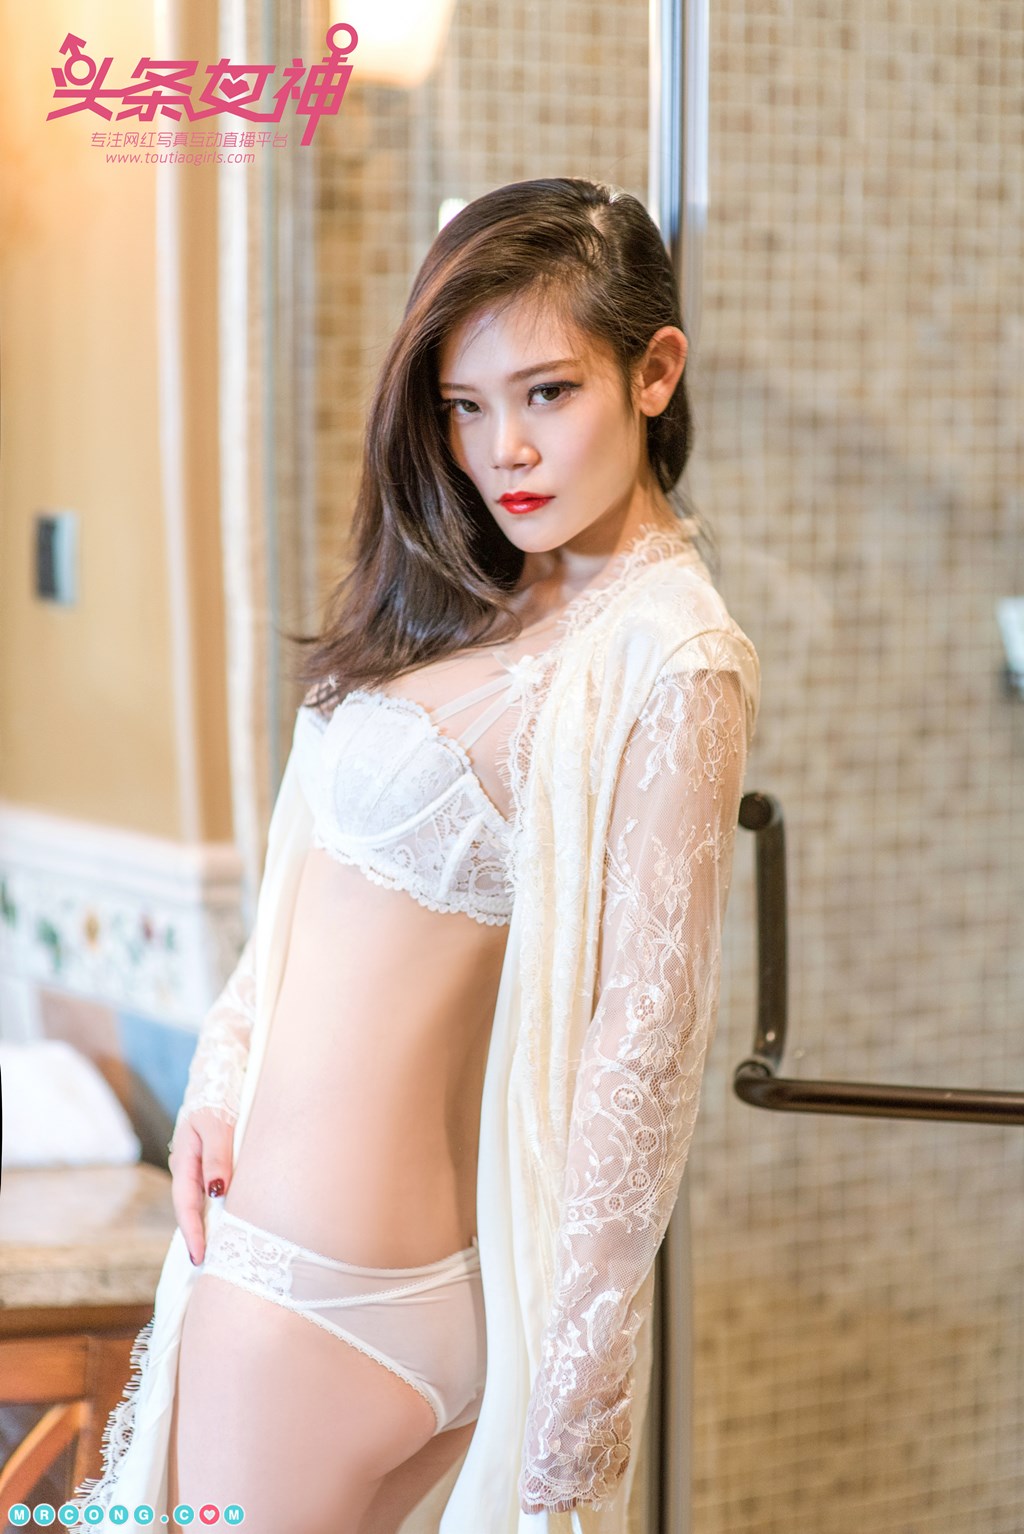 TouTiao 2017-09-26: Model Xiao Mei (小 美) (21 photos) photo 1-8